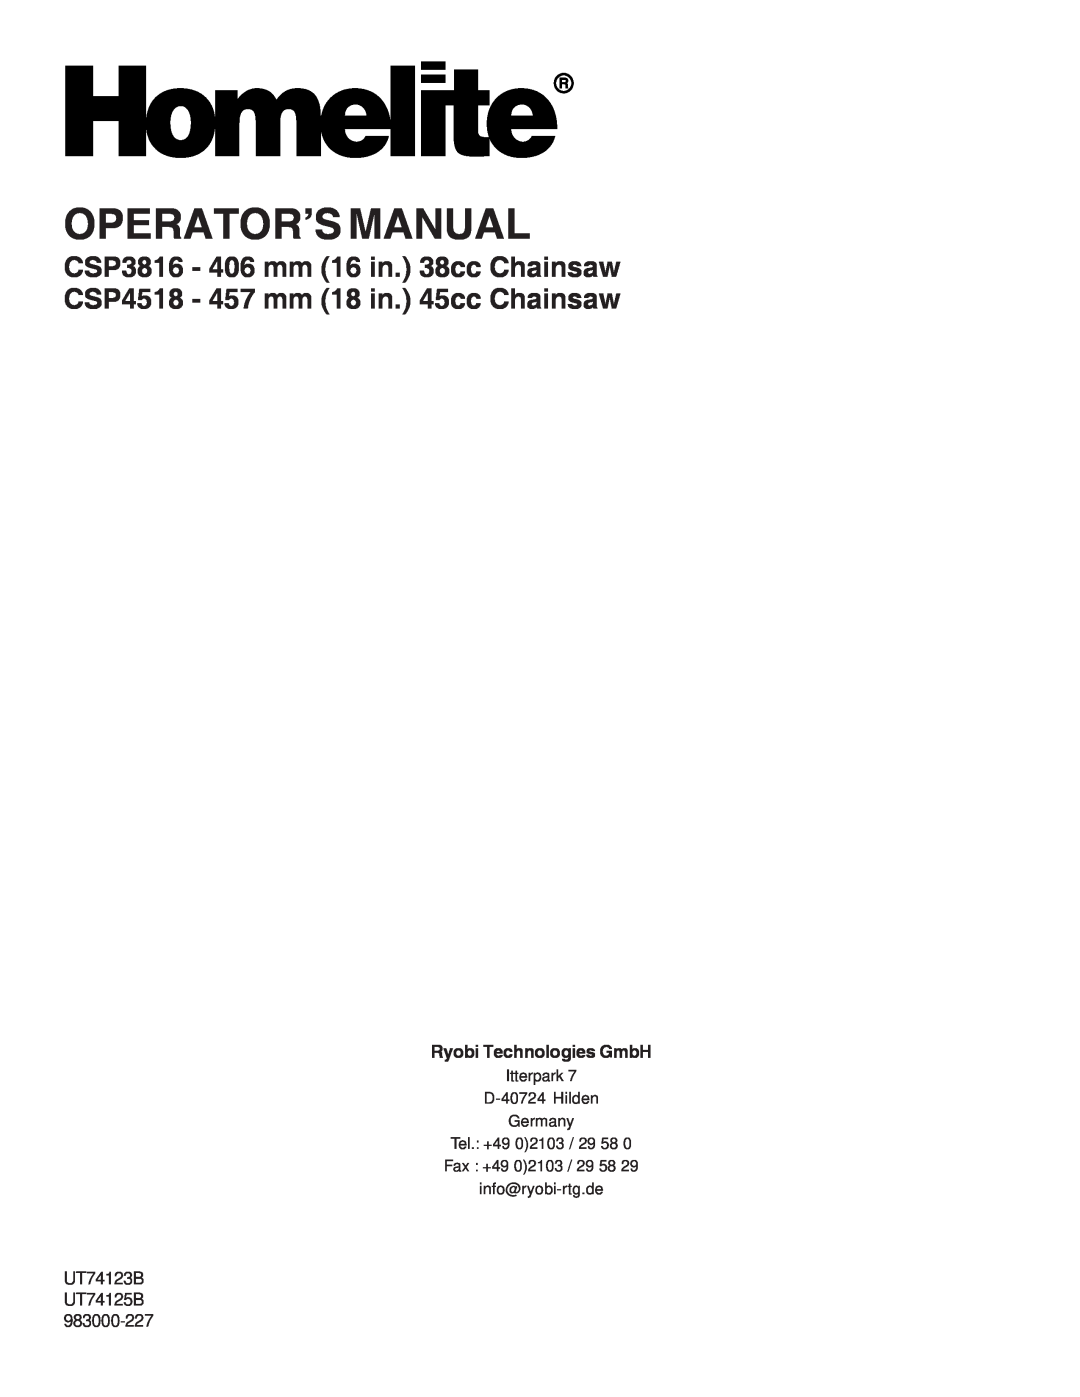 Homelite CSP3816, CSP4518 Operator’S Manual, Ryobi Technologies GmbH, UT74123B UT74125B, Itterpark D-40724Hilden Germany 